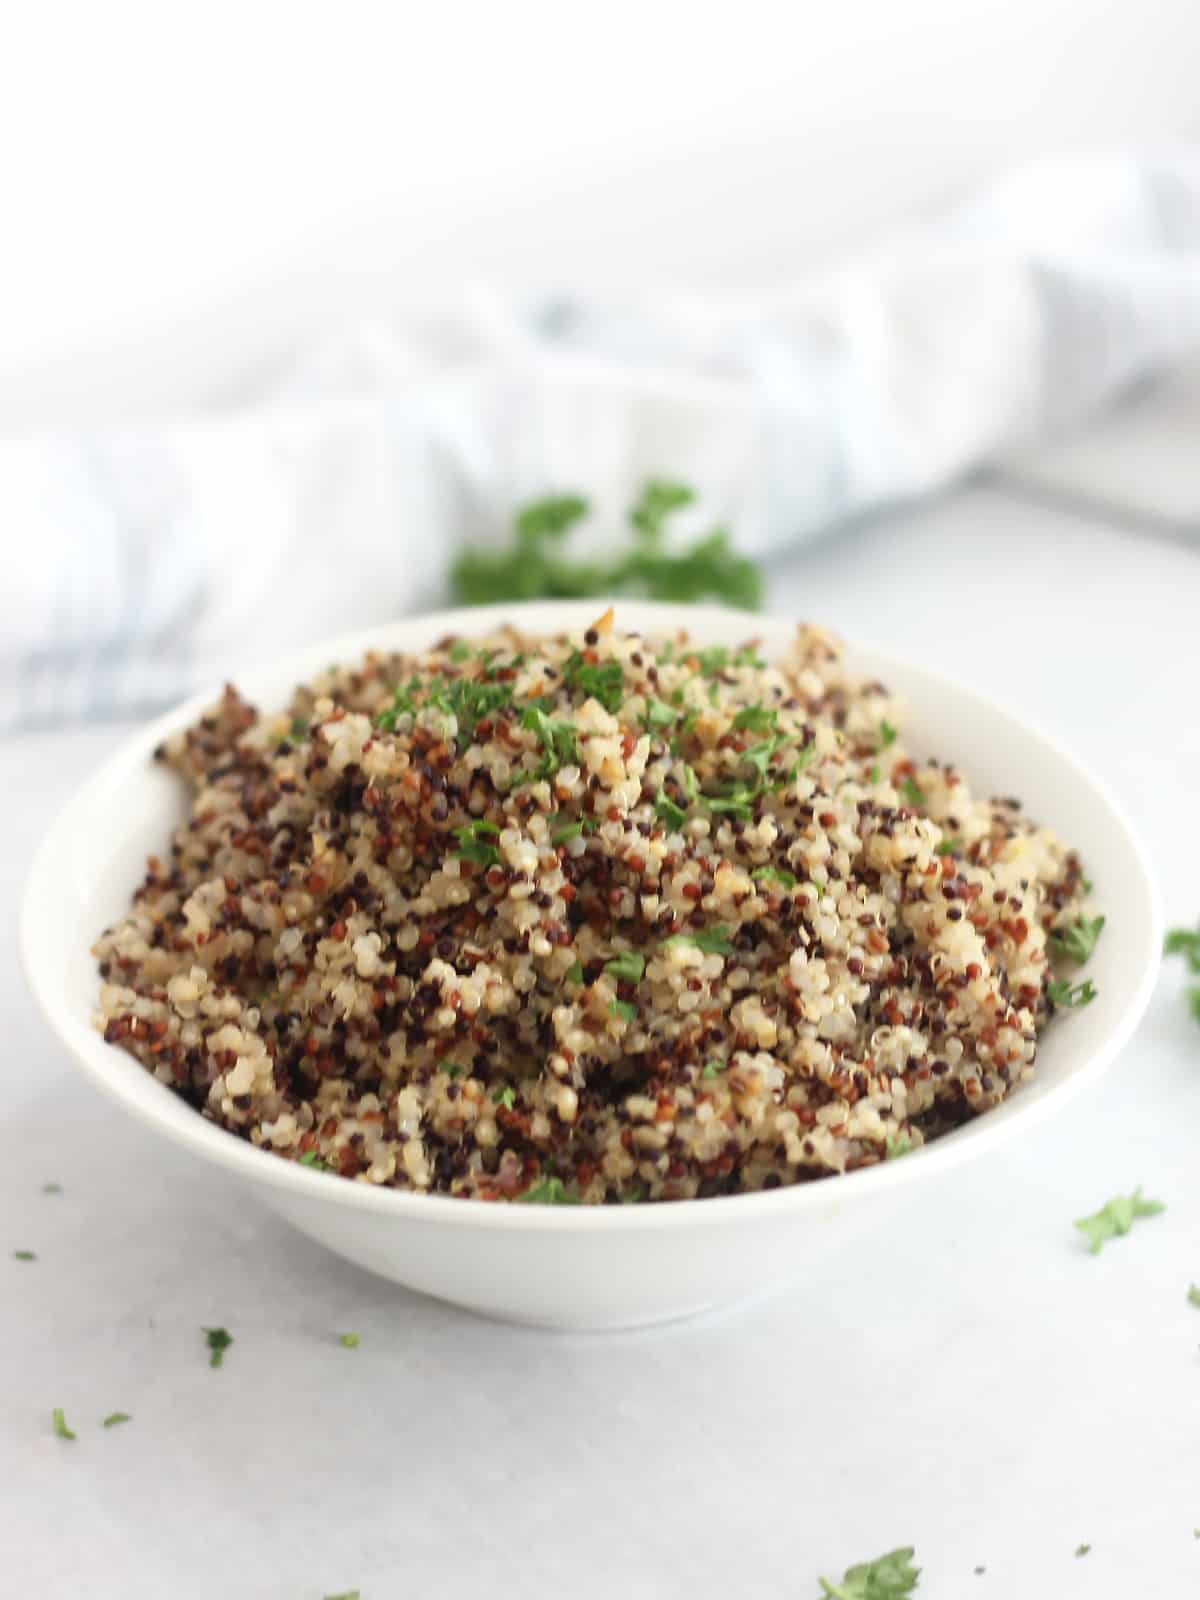 A bowl of tri-color quinoa next to fresh parsley sprigs.